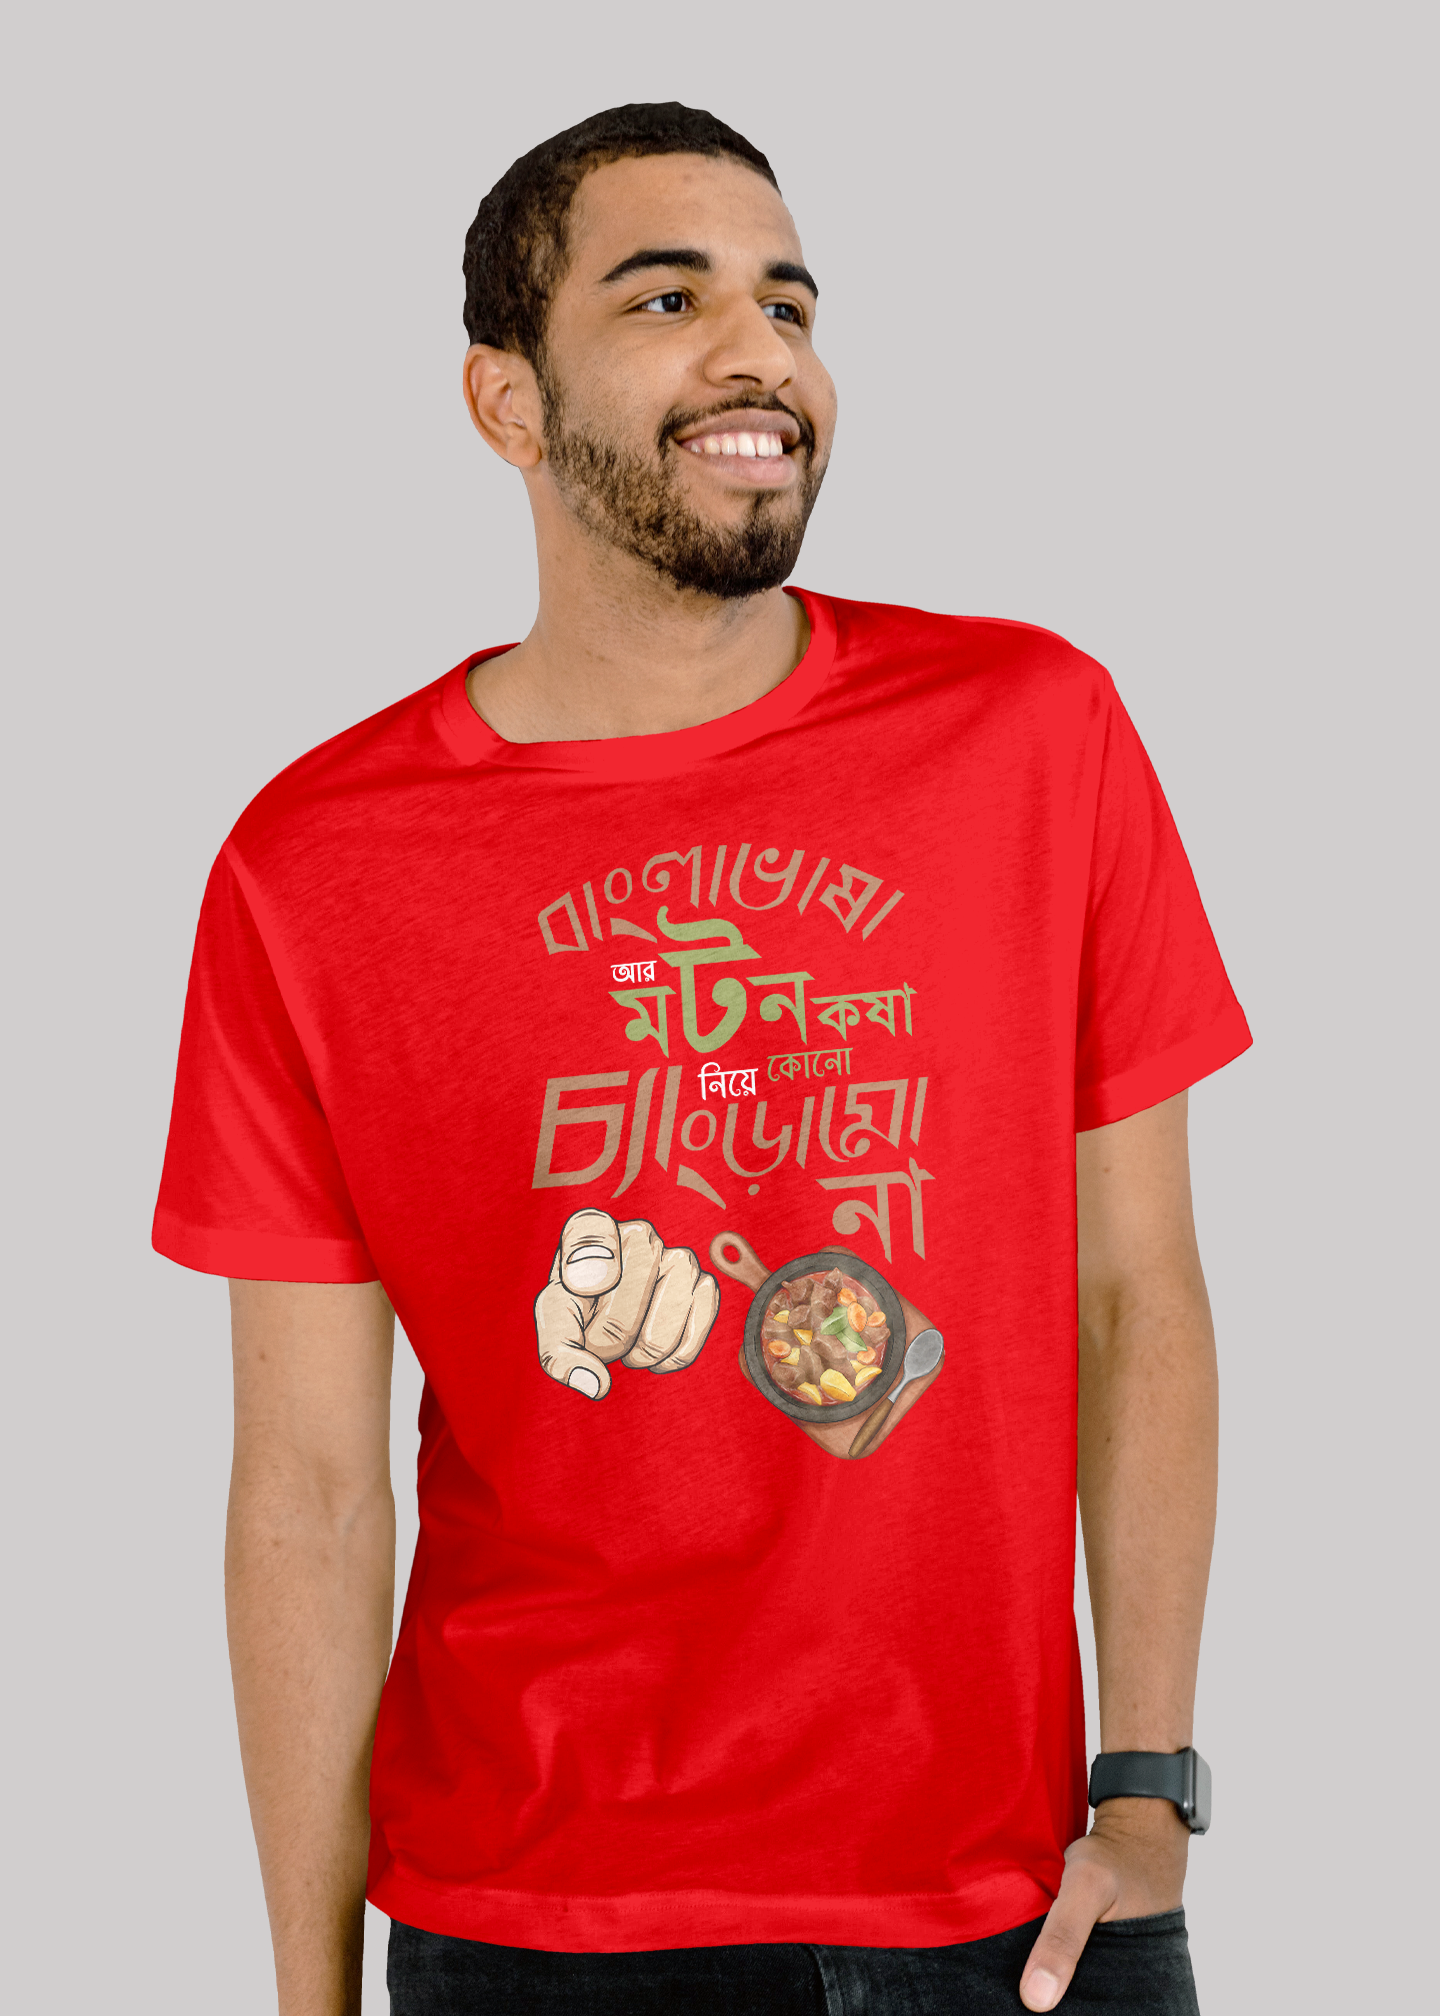 Bangla vasha r mutton koshabengali Bengali Printed Half Sleeve Premium Cotton T-shirt For Men